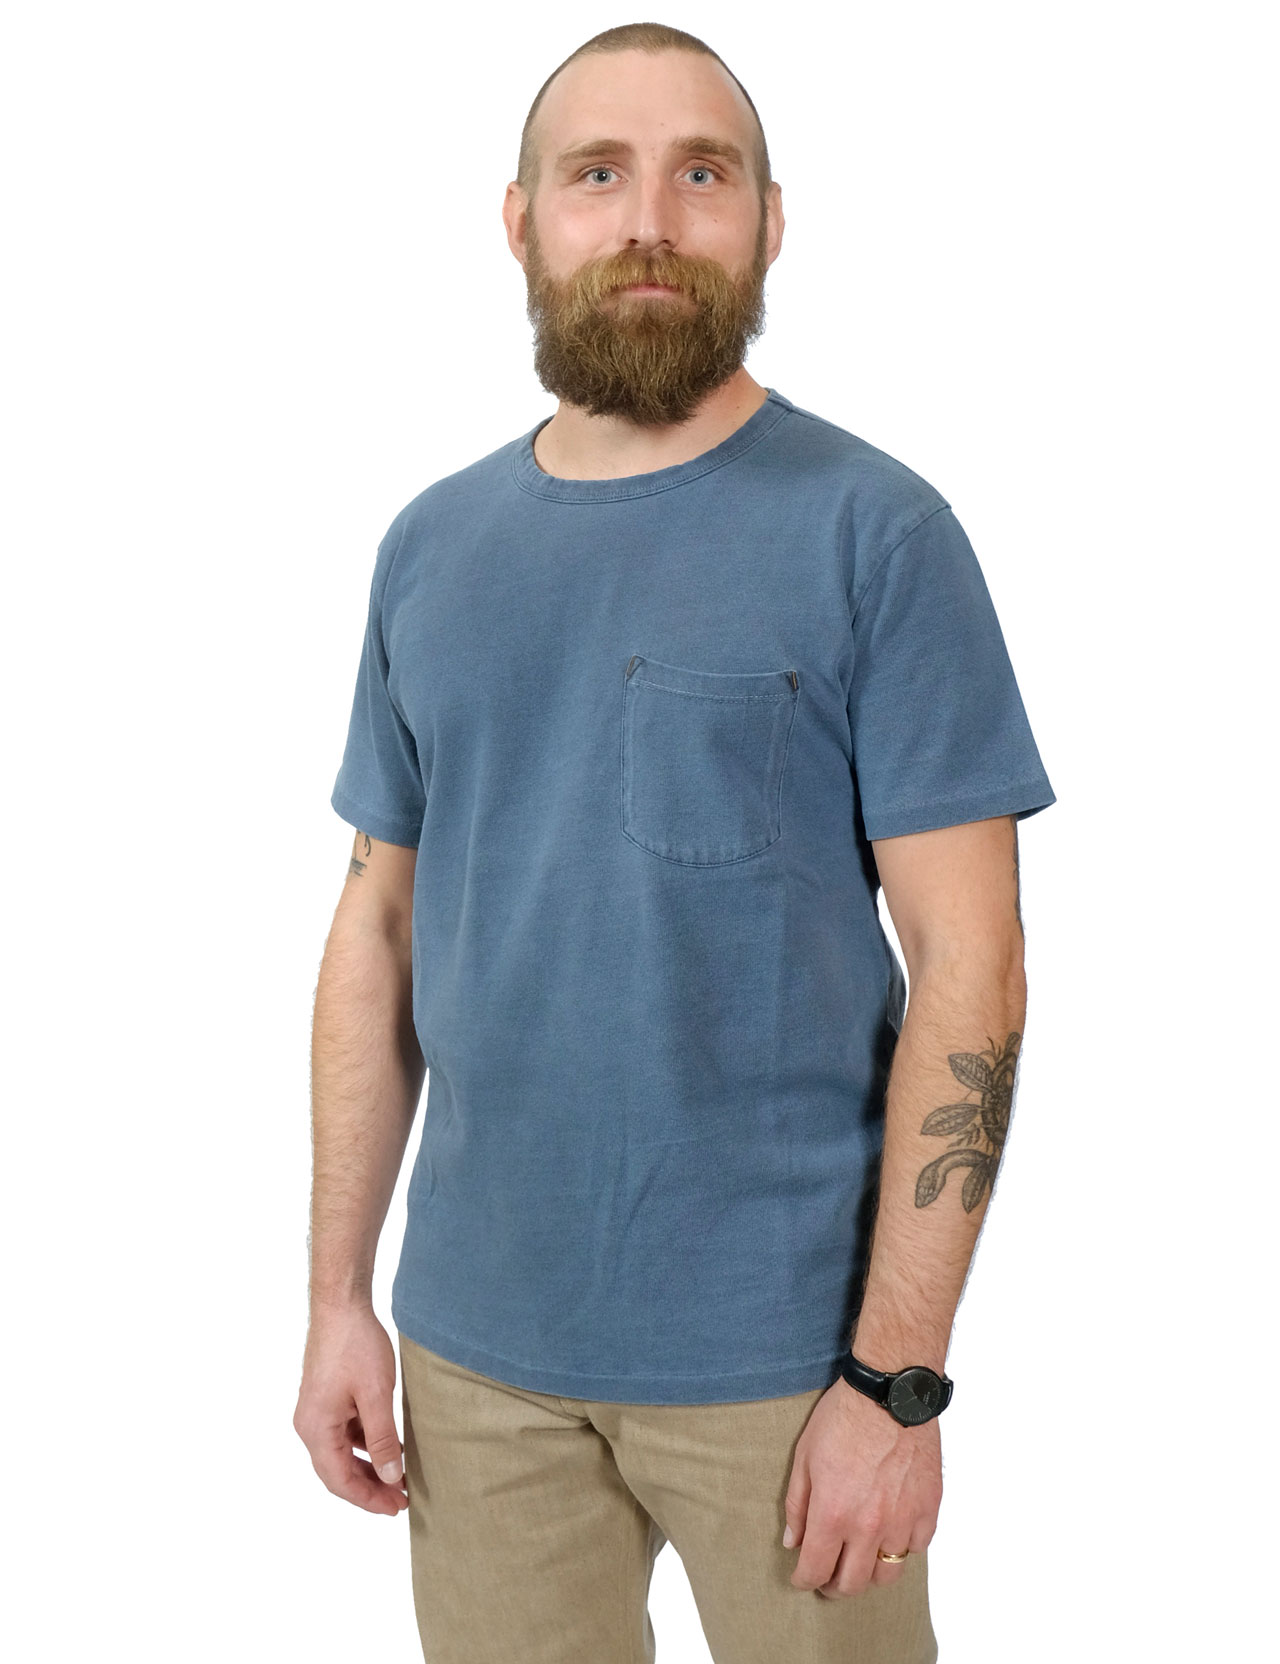 Freenote-Cloth---13-Ounce-Pocket-T-Shirt---Faded-Blue-991-21